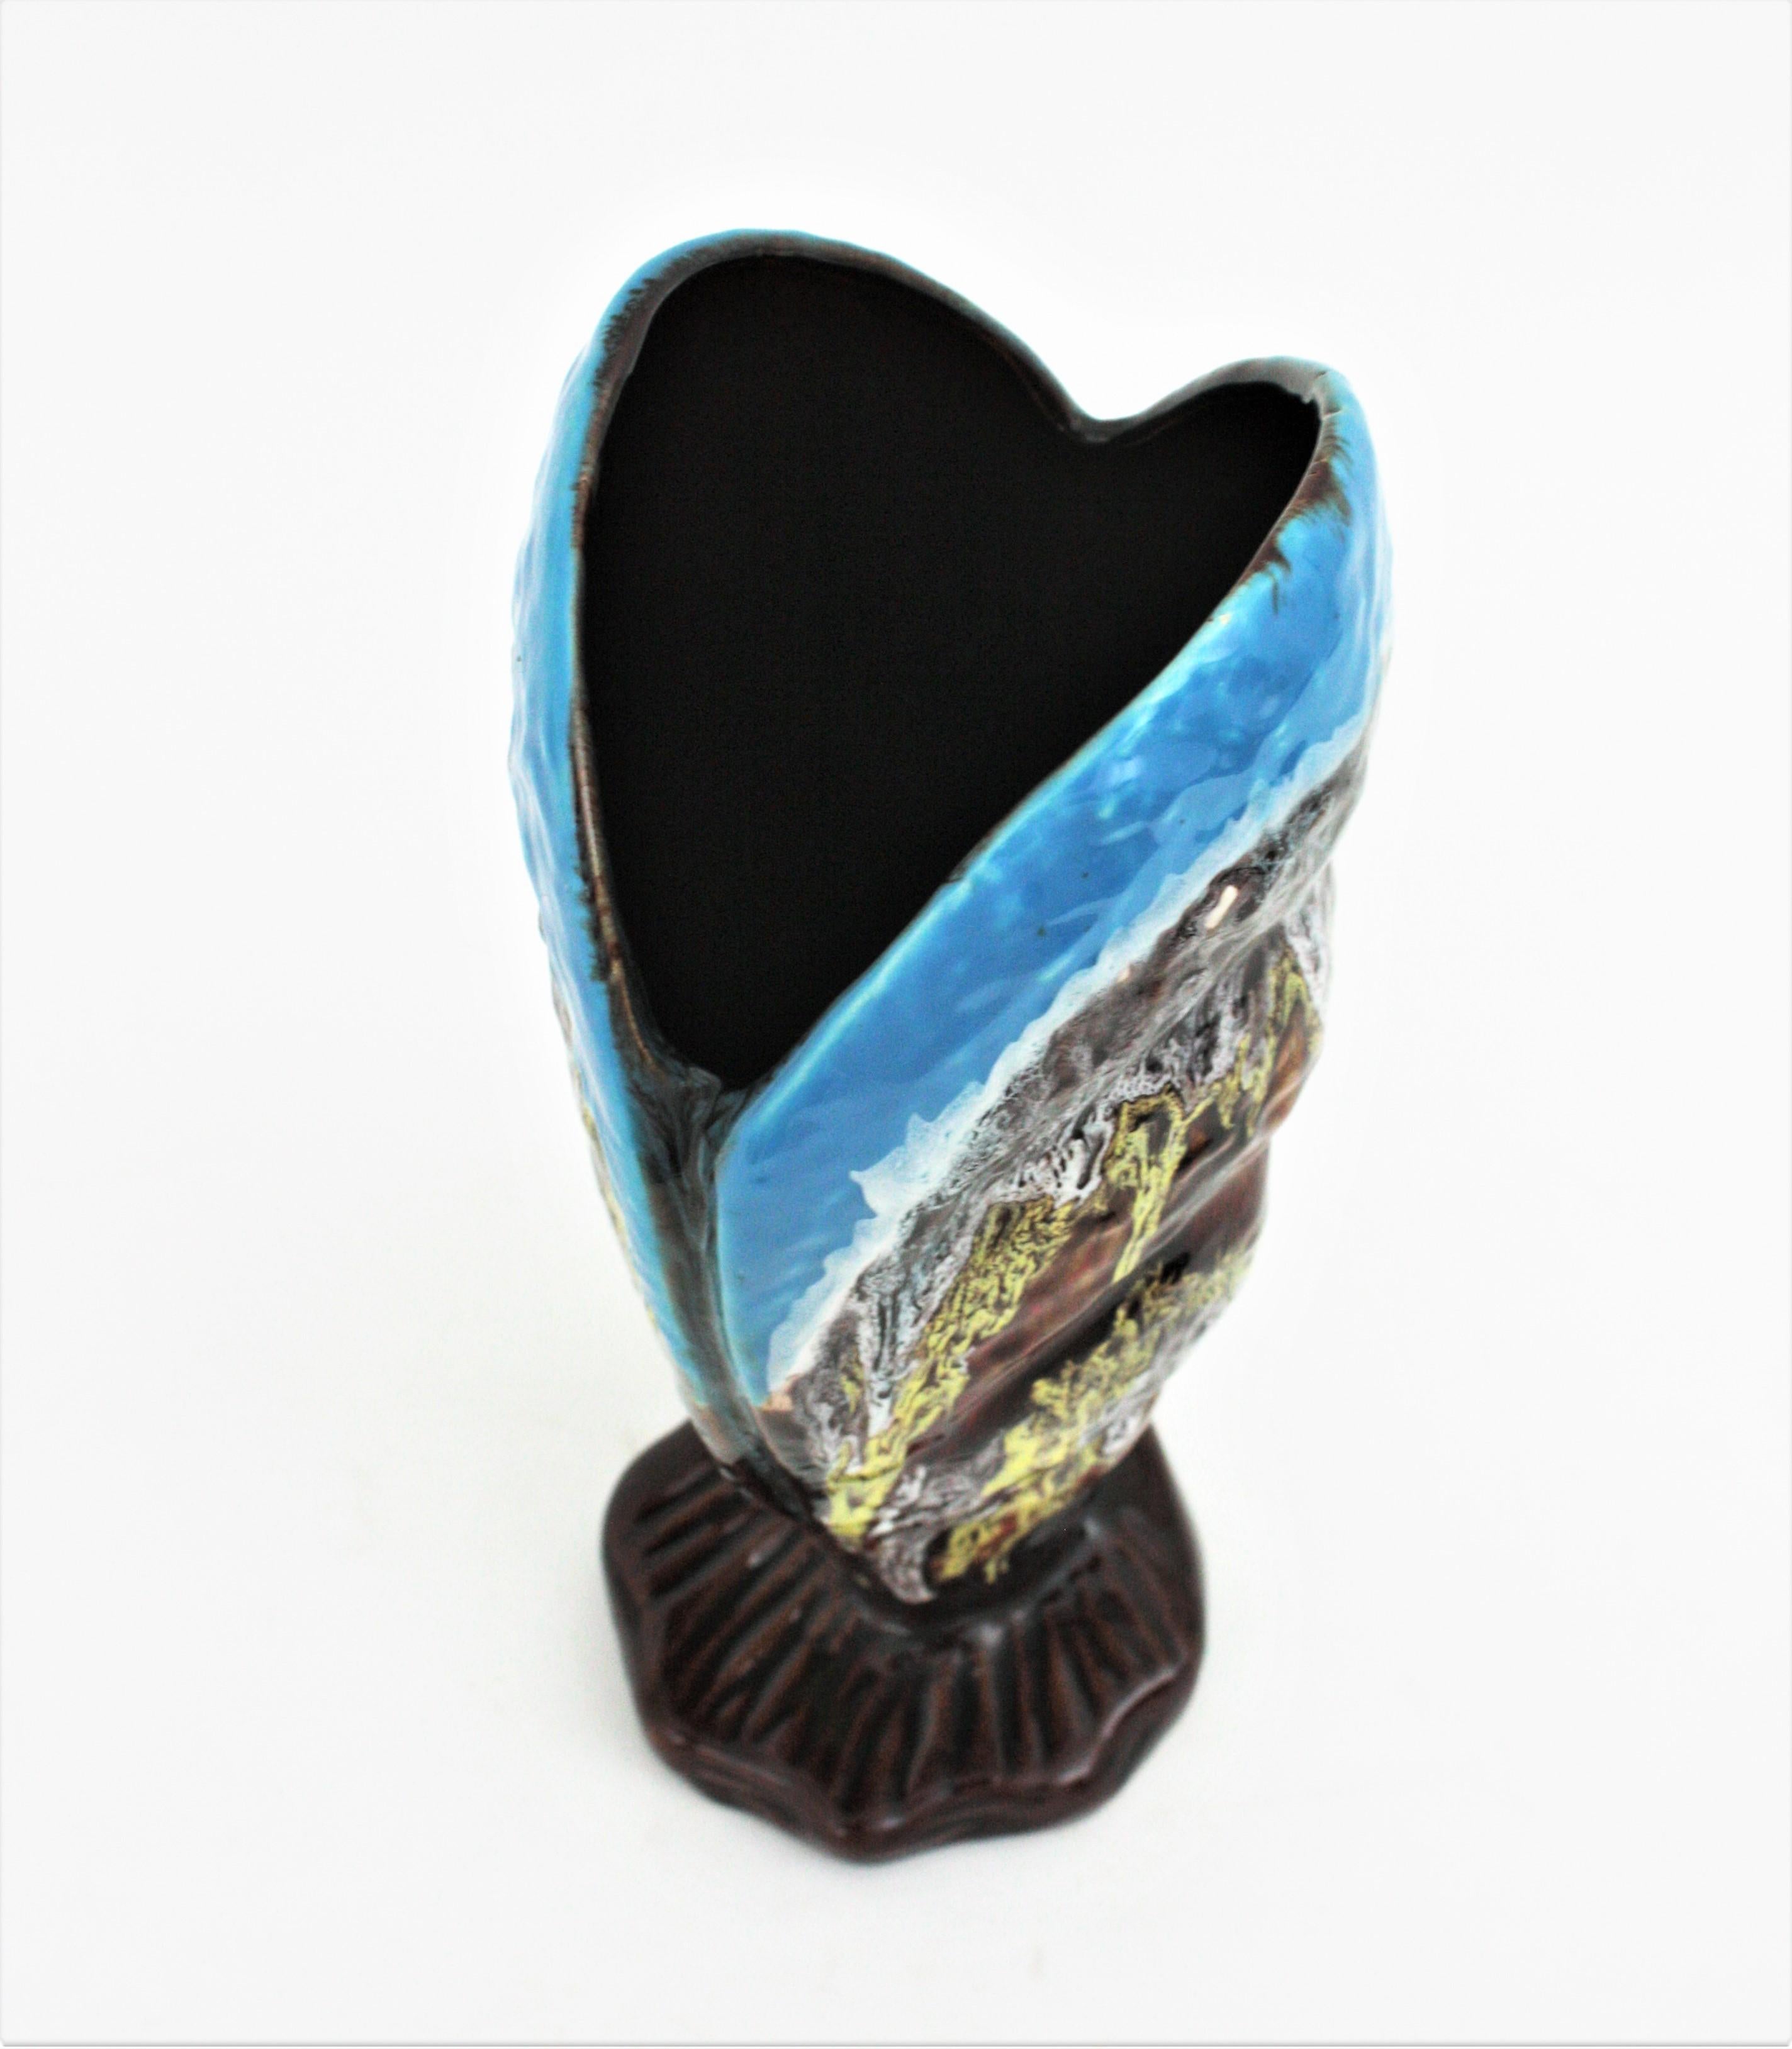 French Vallauris Majolica Shell Shaped Vase in Multi Color Glazed Ceramic For Sale 6